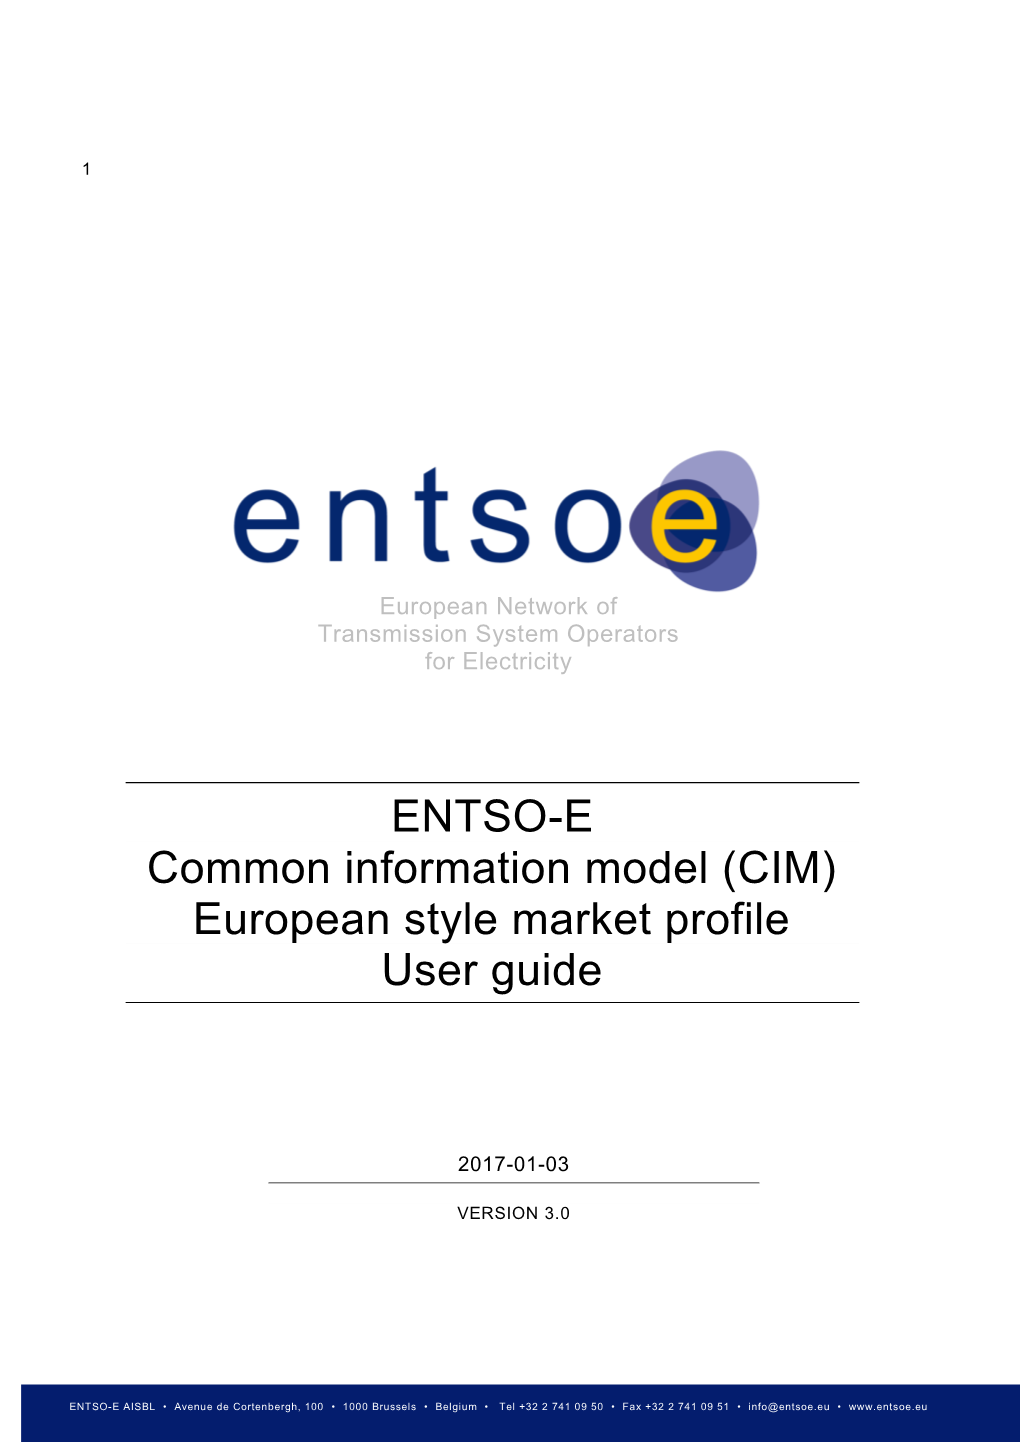 Common Information Model (CIM) European Style Market Profile User Guide